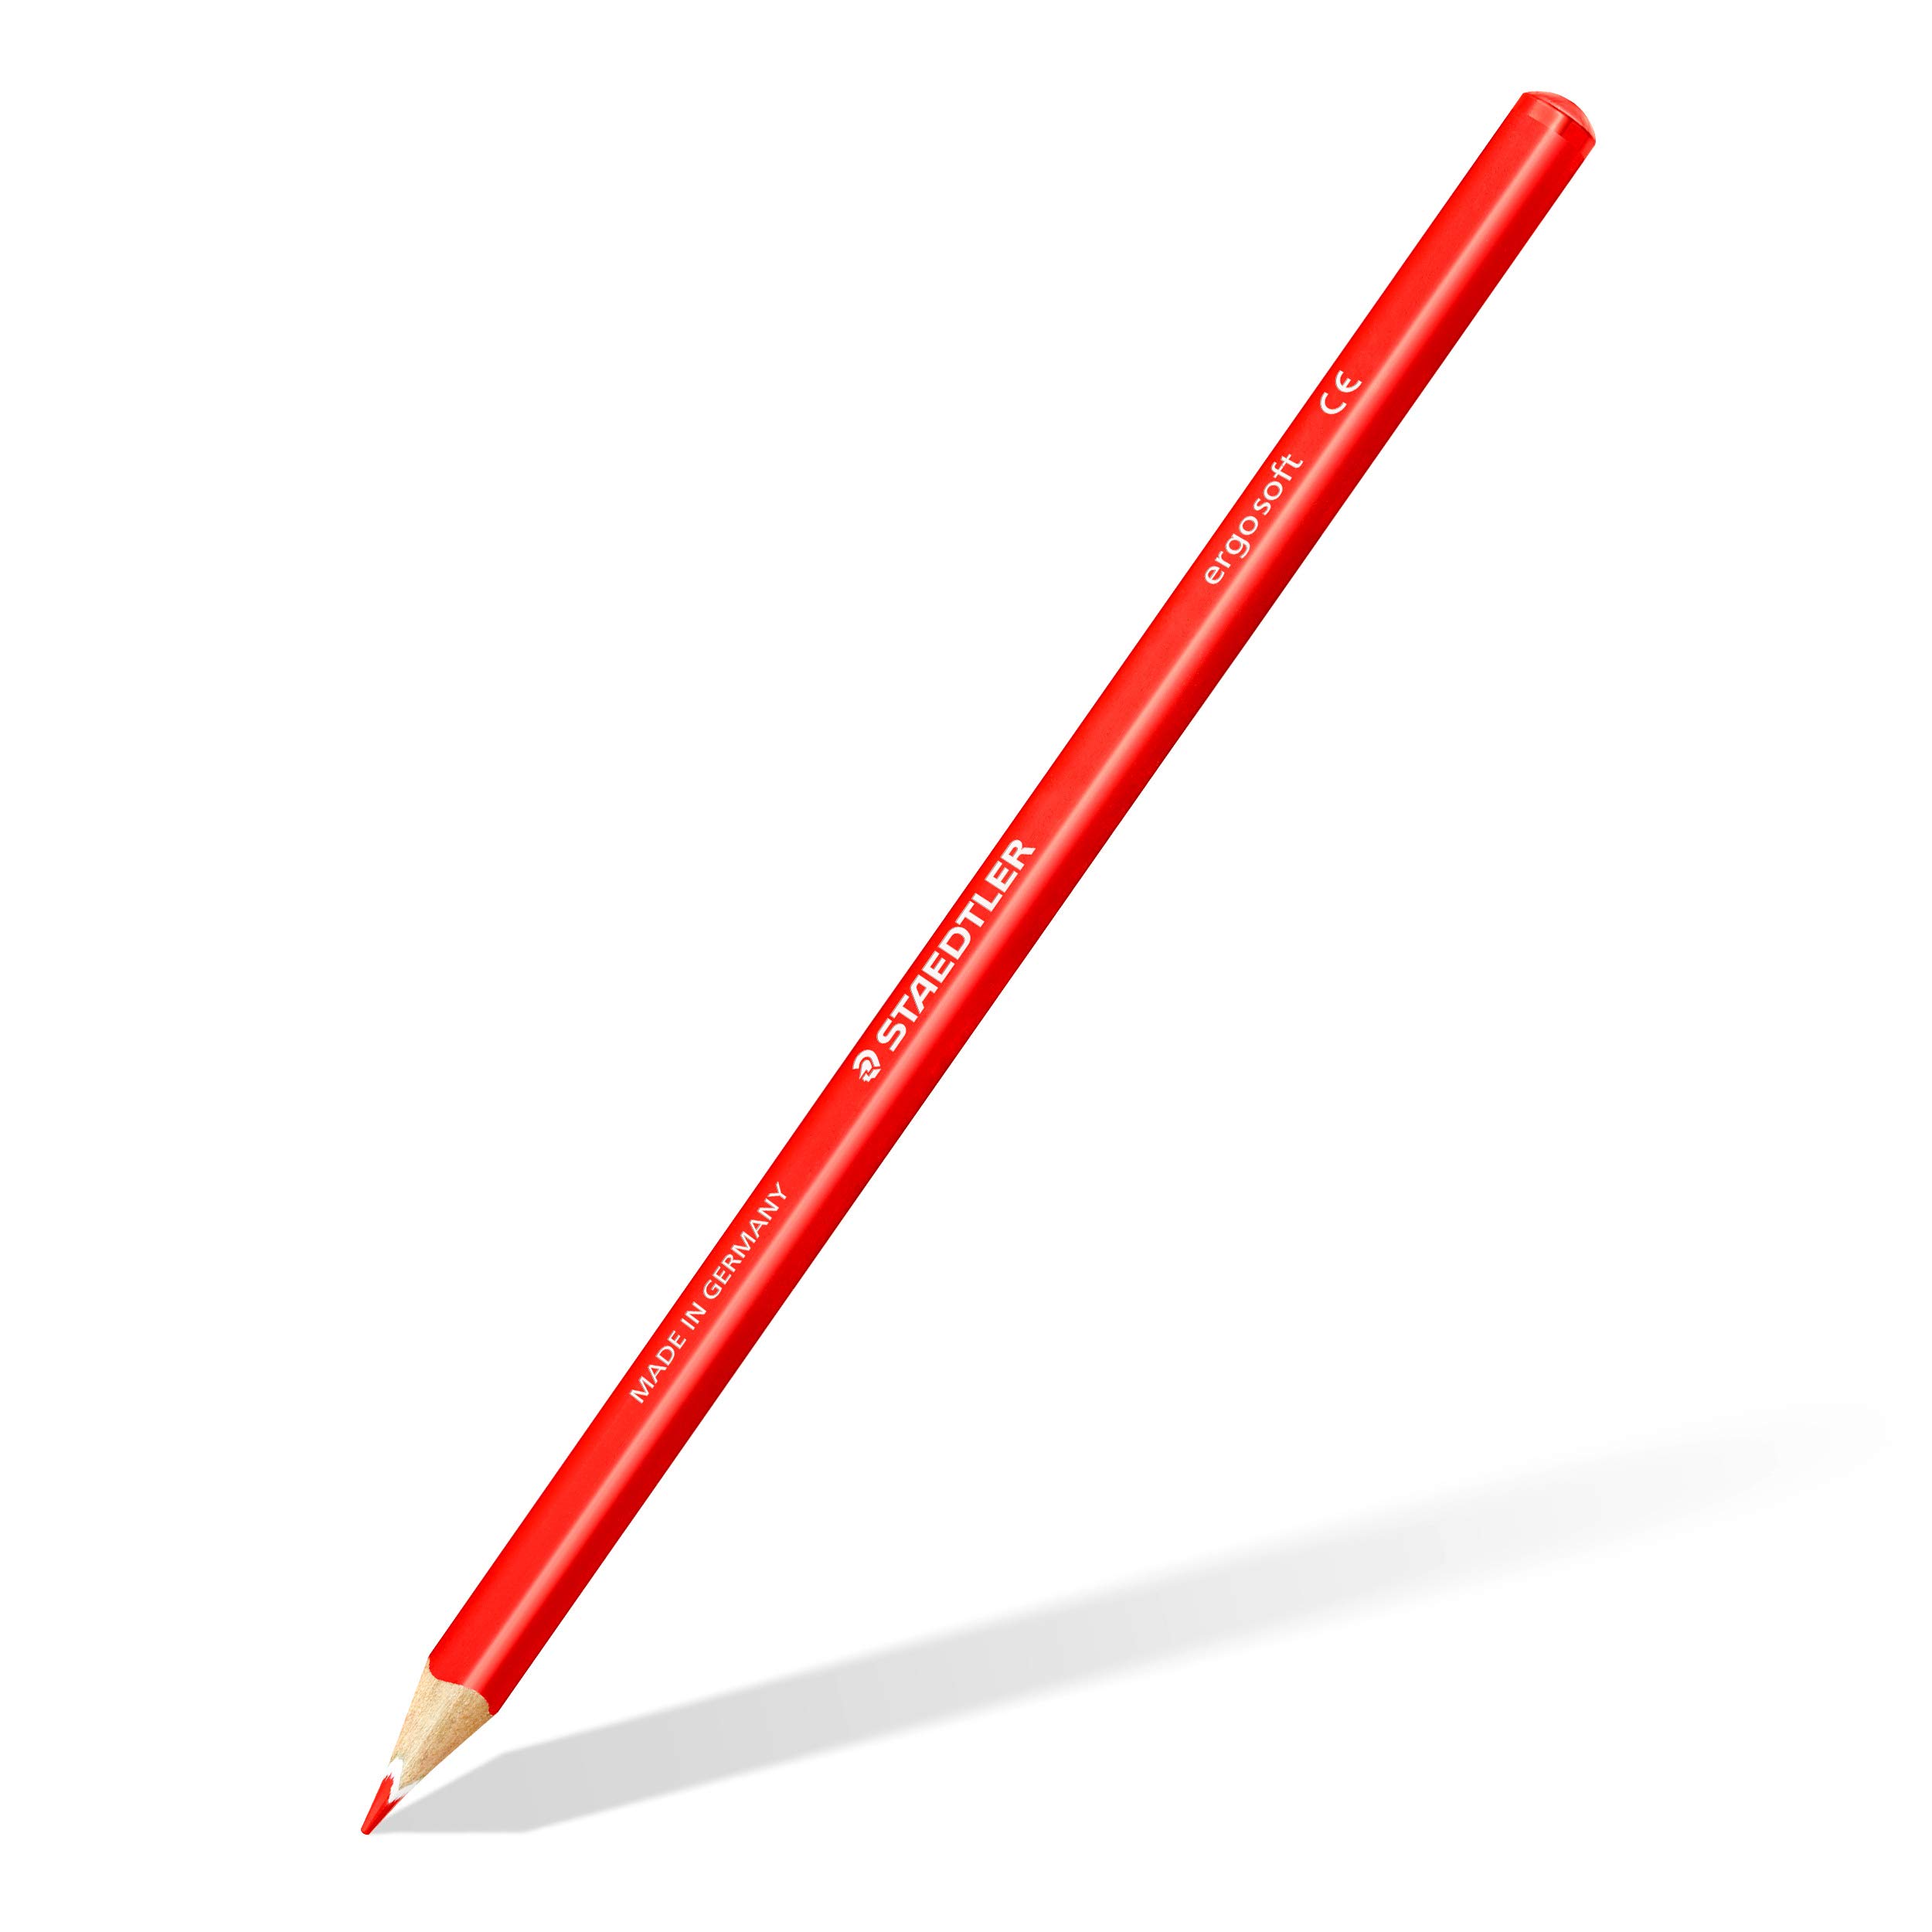 STAEDTLER Ergosoft Colored Pencils, Set of 12 Colors in Stand-up Easel Case (157SB12)